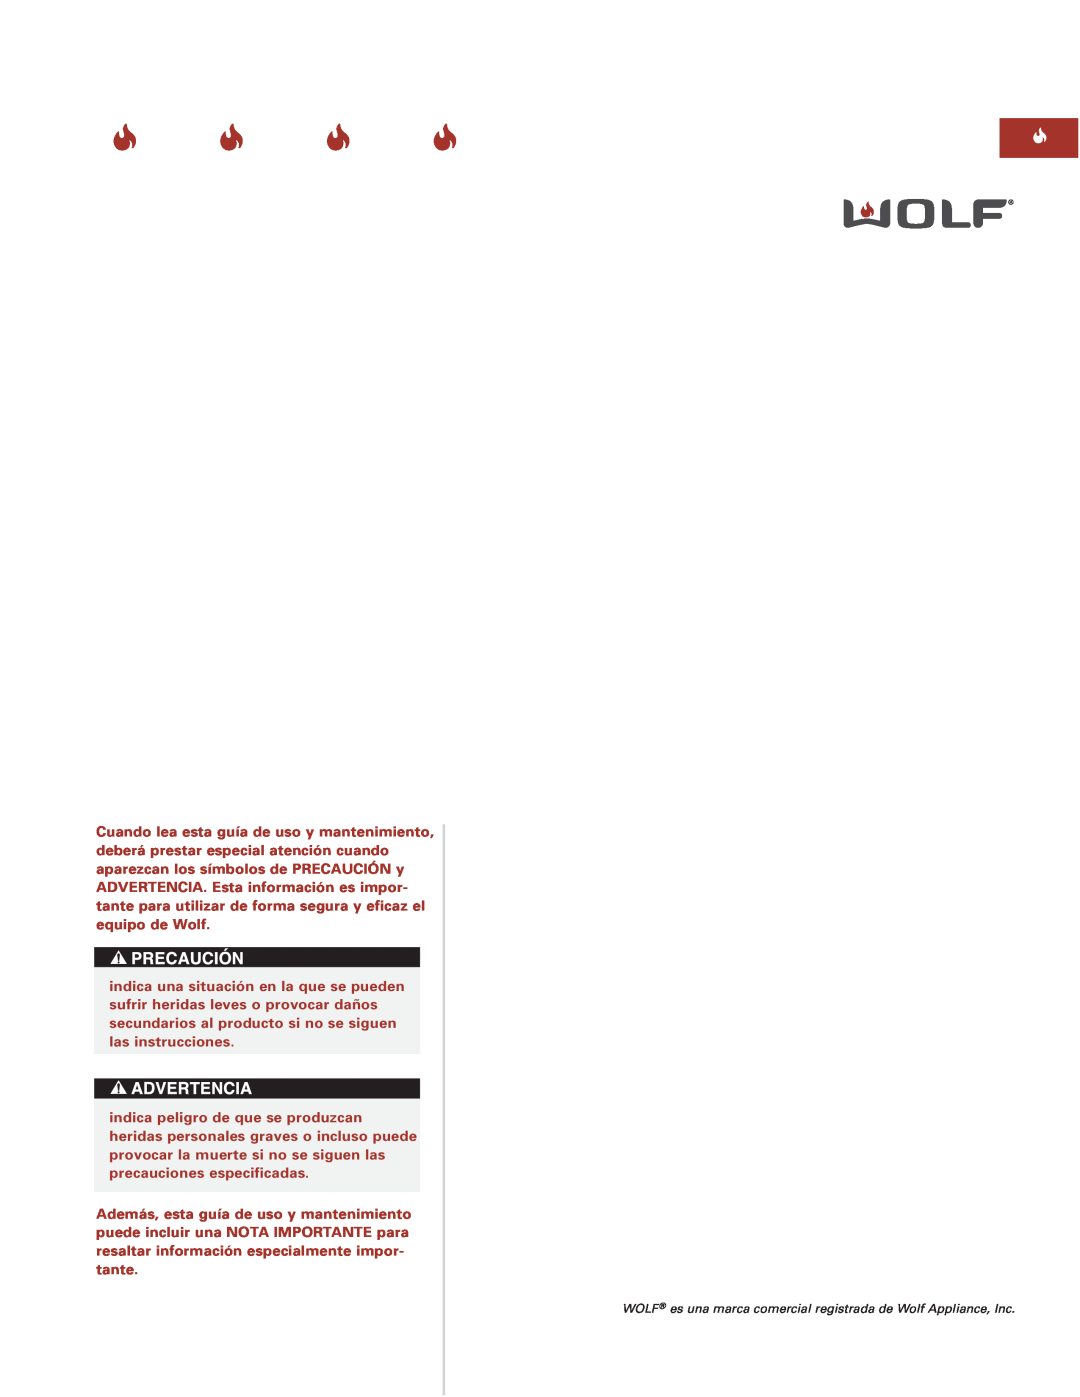 Sub-Zero Downdraft Ventilation manual WOLF es una marca comercial registrada de Wolf Appliance, Inc 